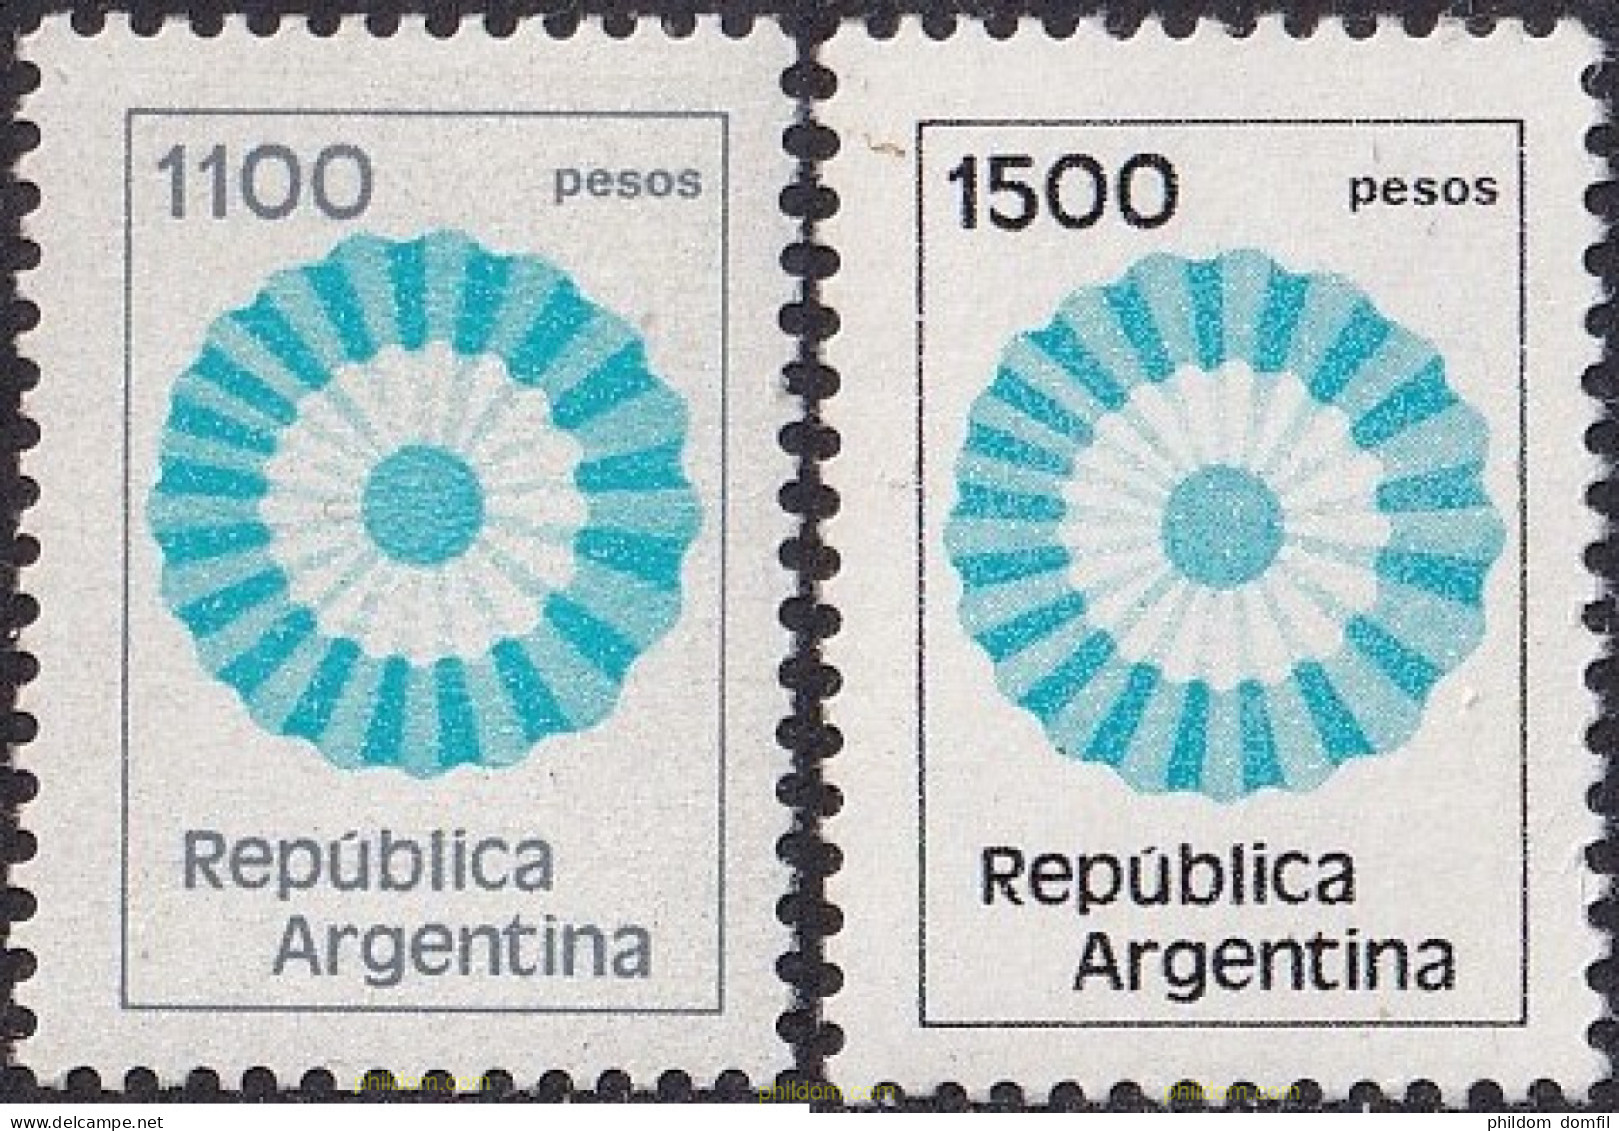 729286 MNH ARGENTINA 1981 SERIE CORRIENTE - Nuevos